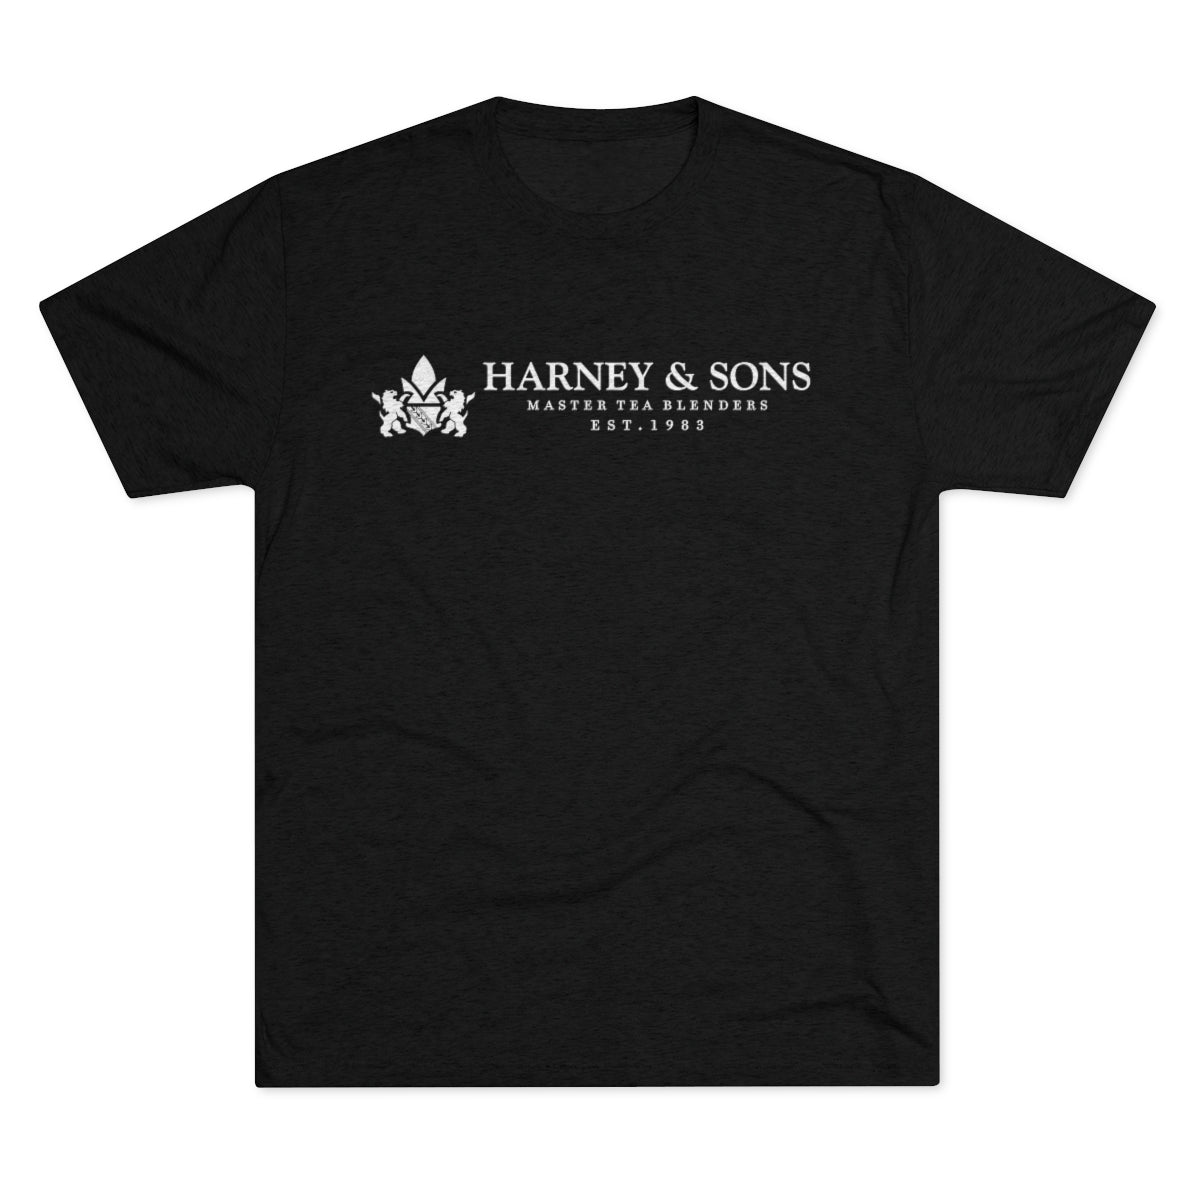 Harney & Sons - Est. 1983 Graphic Tee - Tri-Blend Vintage Black S - Harney & Sons Fine Teas